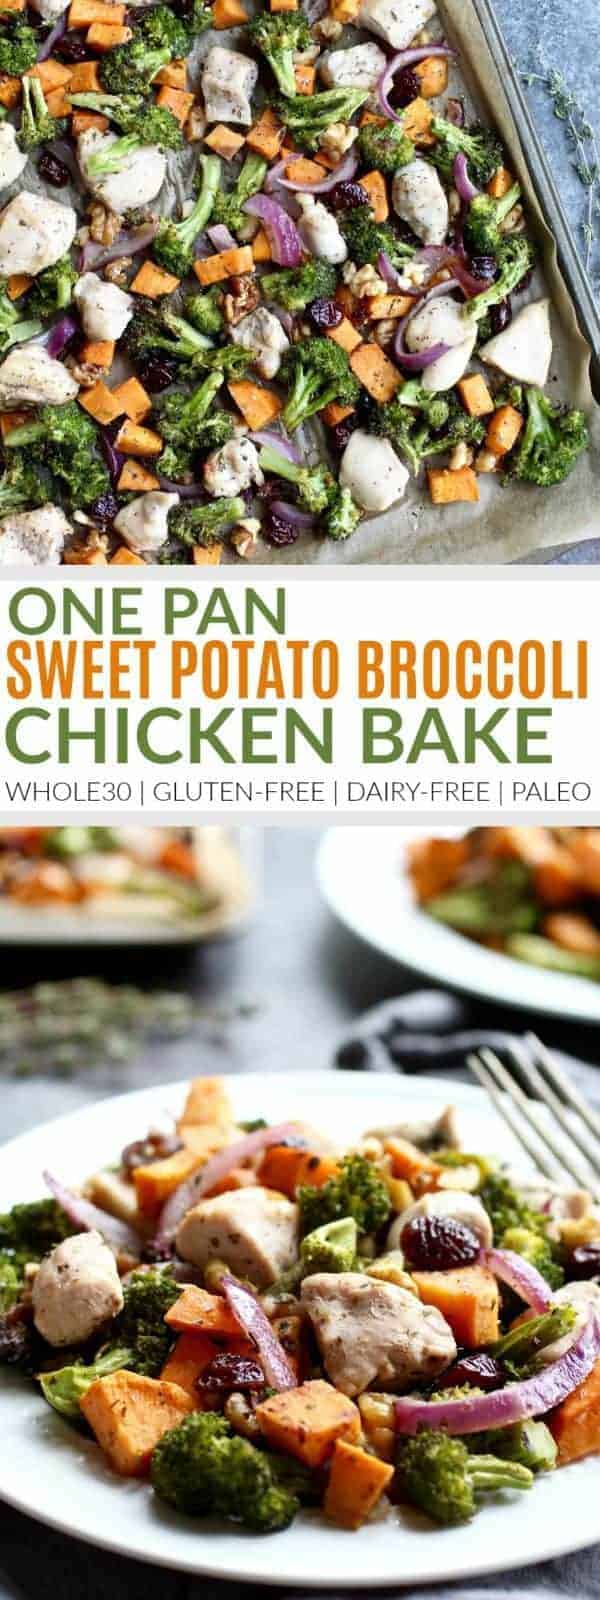 Pinterest image for One Pan Sweet Potato Broccoli Chicken Bake